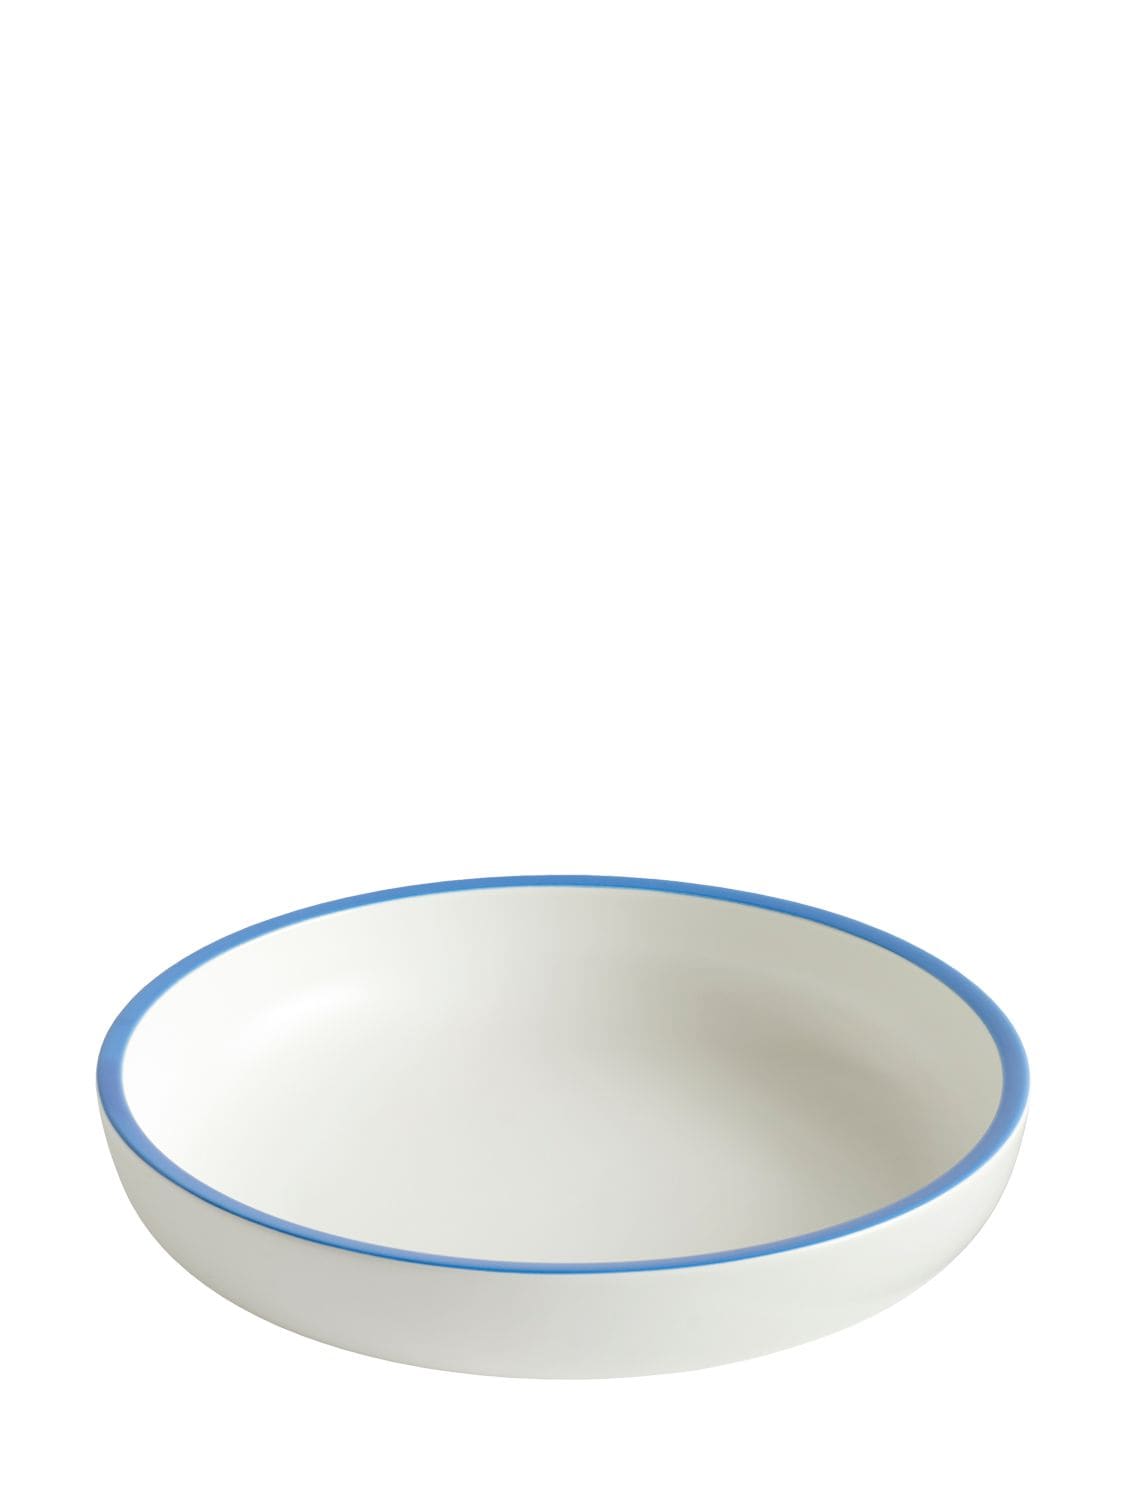 Hay Sobremesa Large Bowl In White